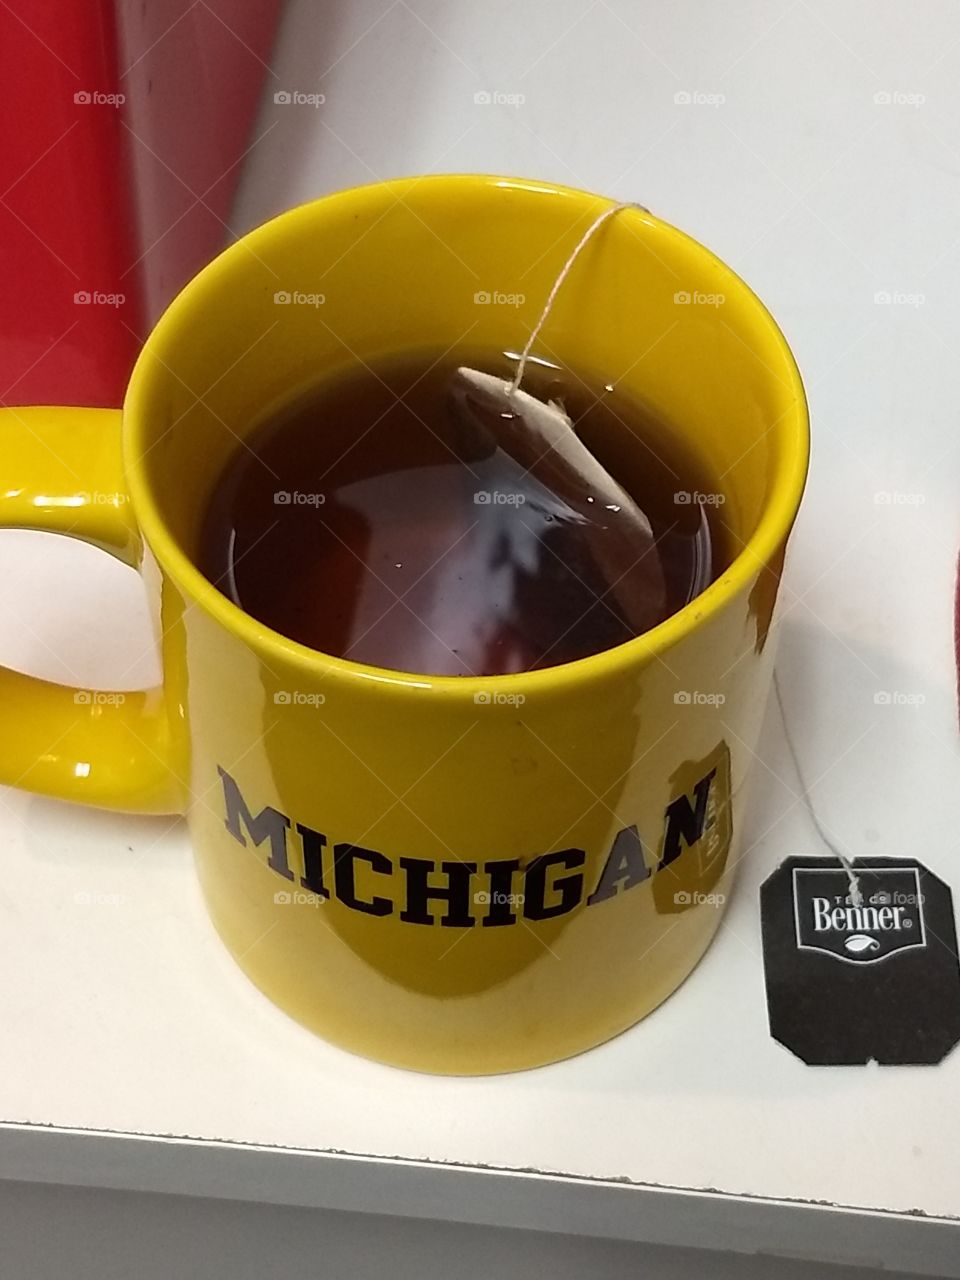 University of Michigan mug with Bennet tea